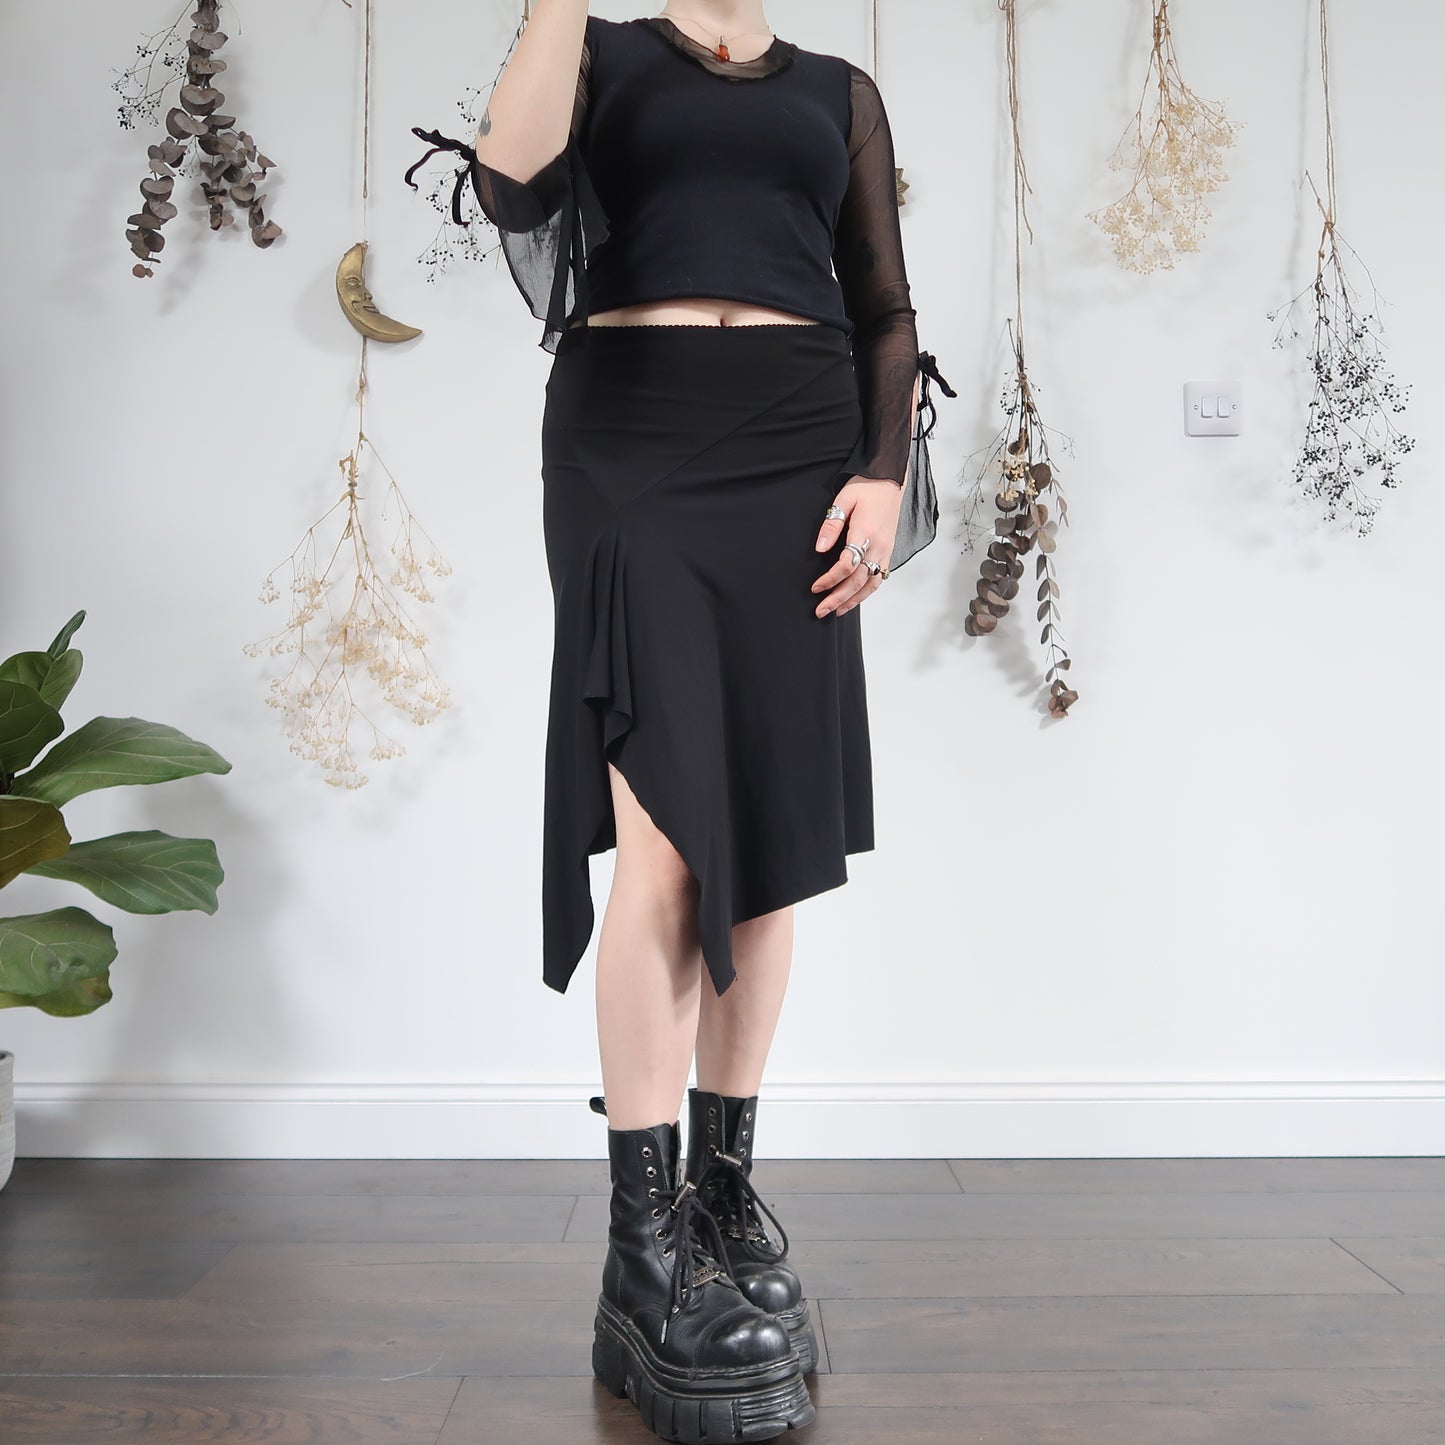 Black midi skirt - size 10/12